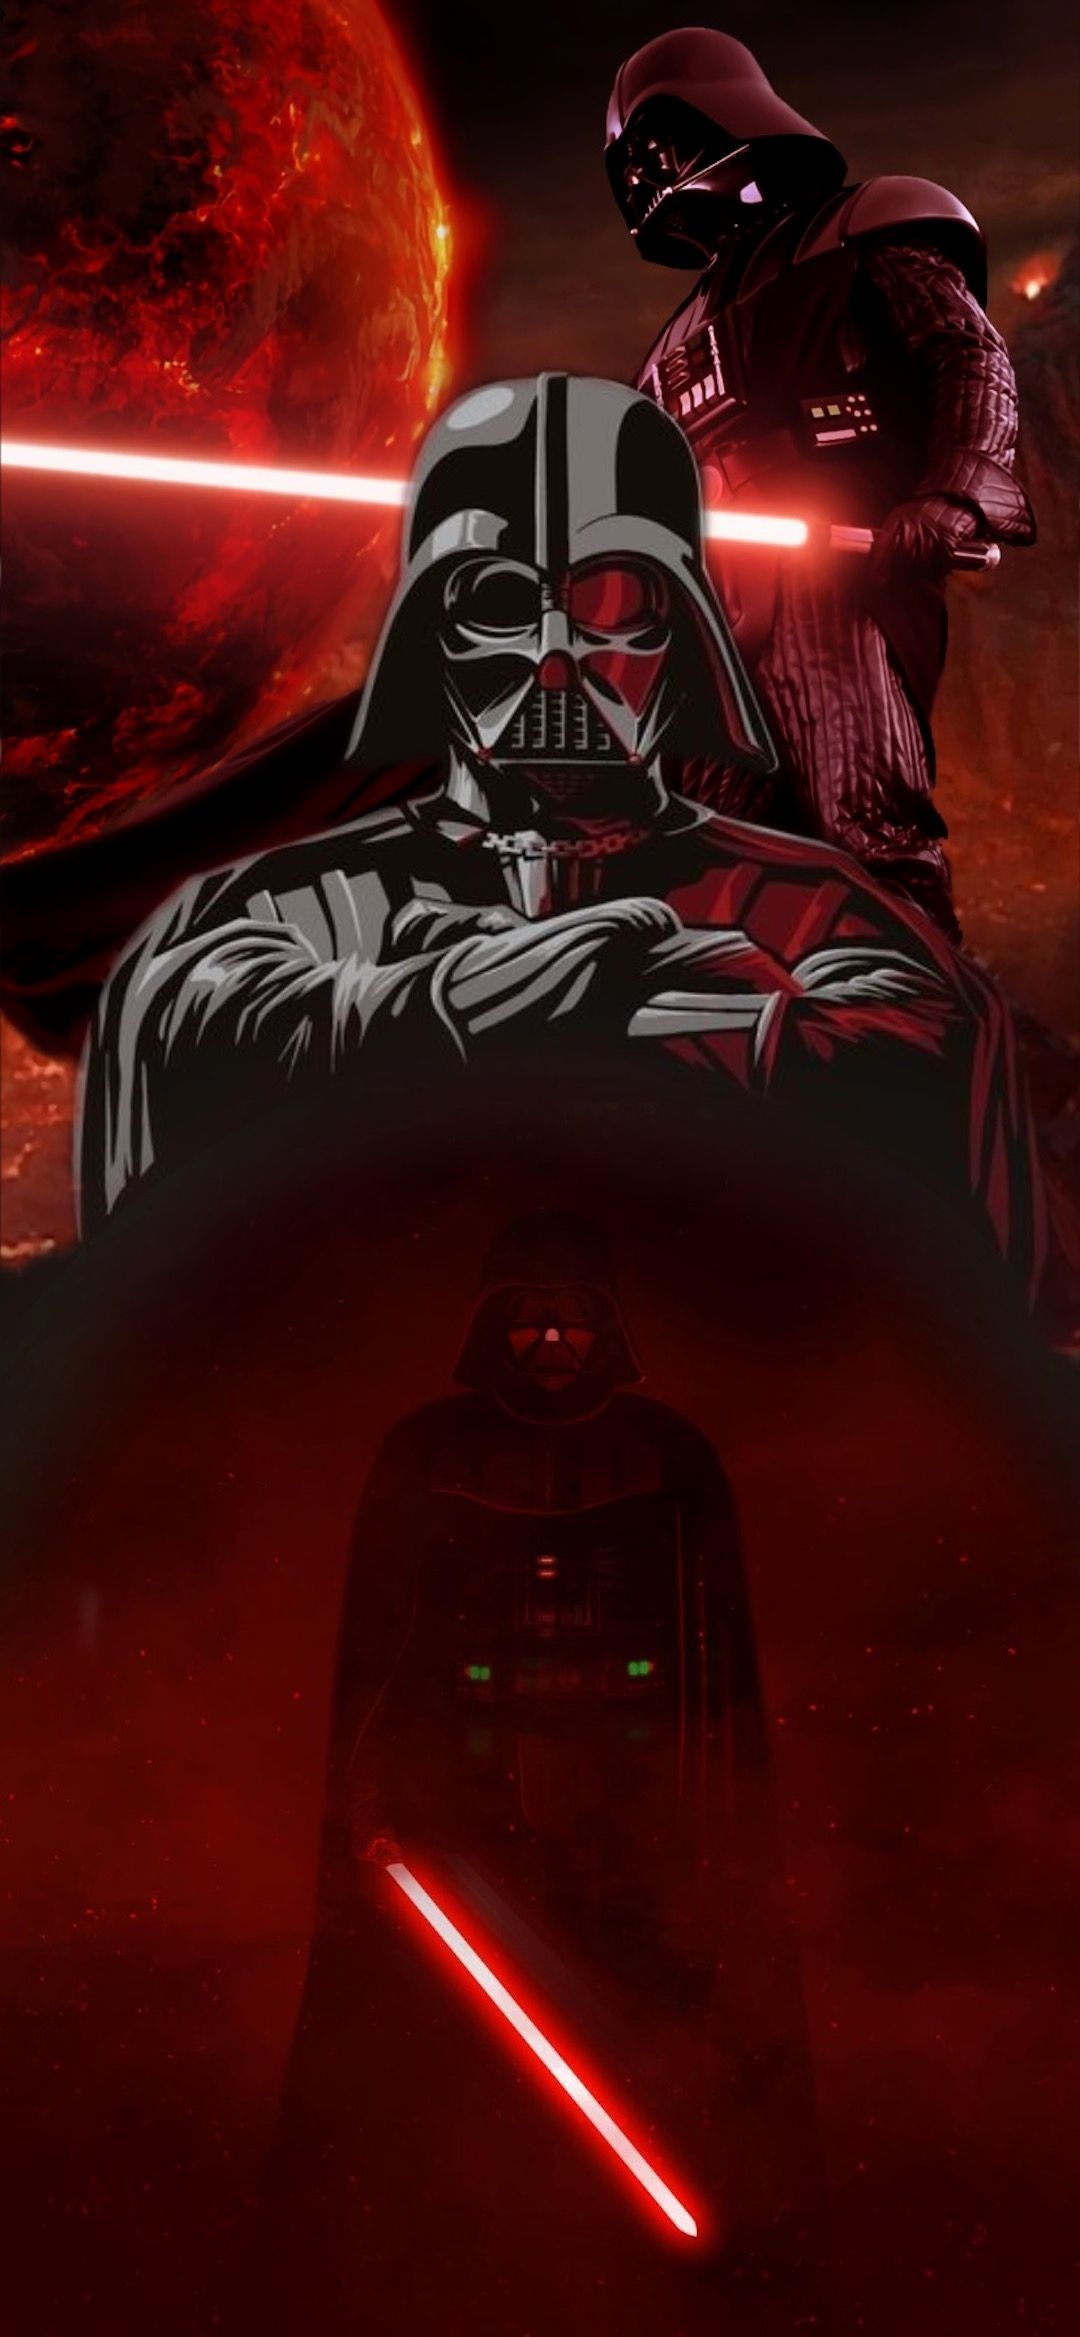 Darth Vader iPhone Wallpaper Free Darth Vader iPhone Background